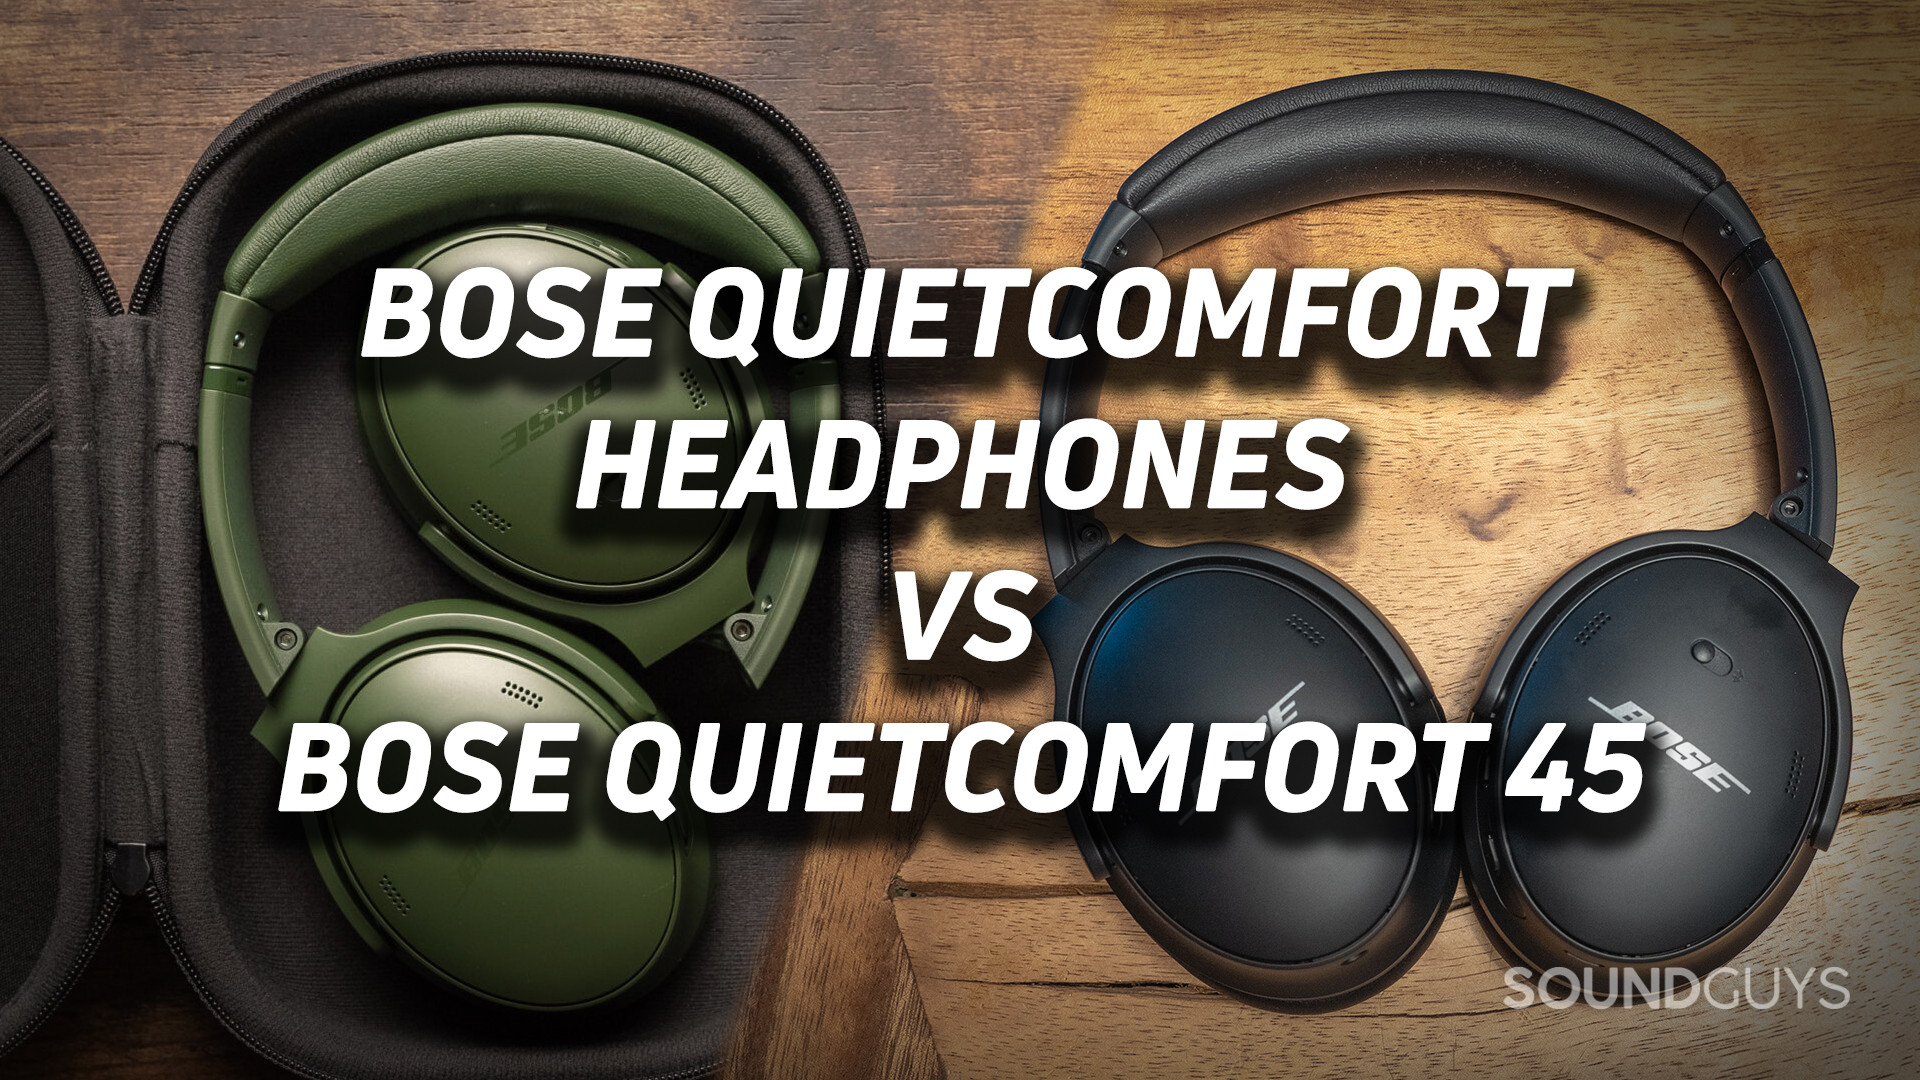 Headphones 45 SoundGuys QuietComfort vs - Bose Bose QuietComfort